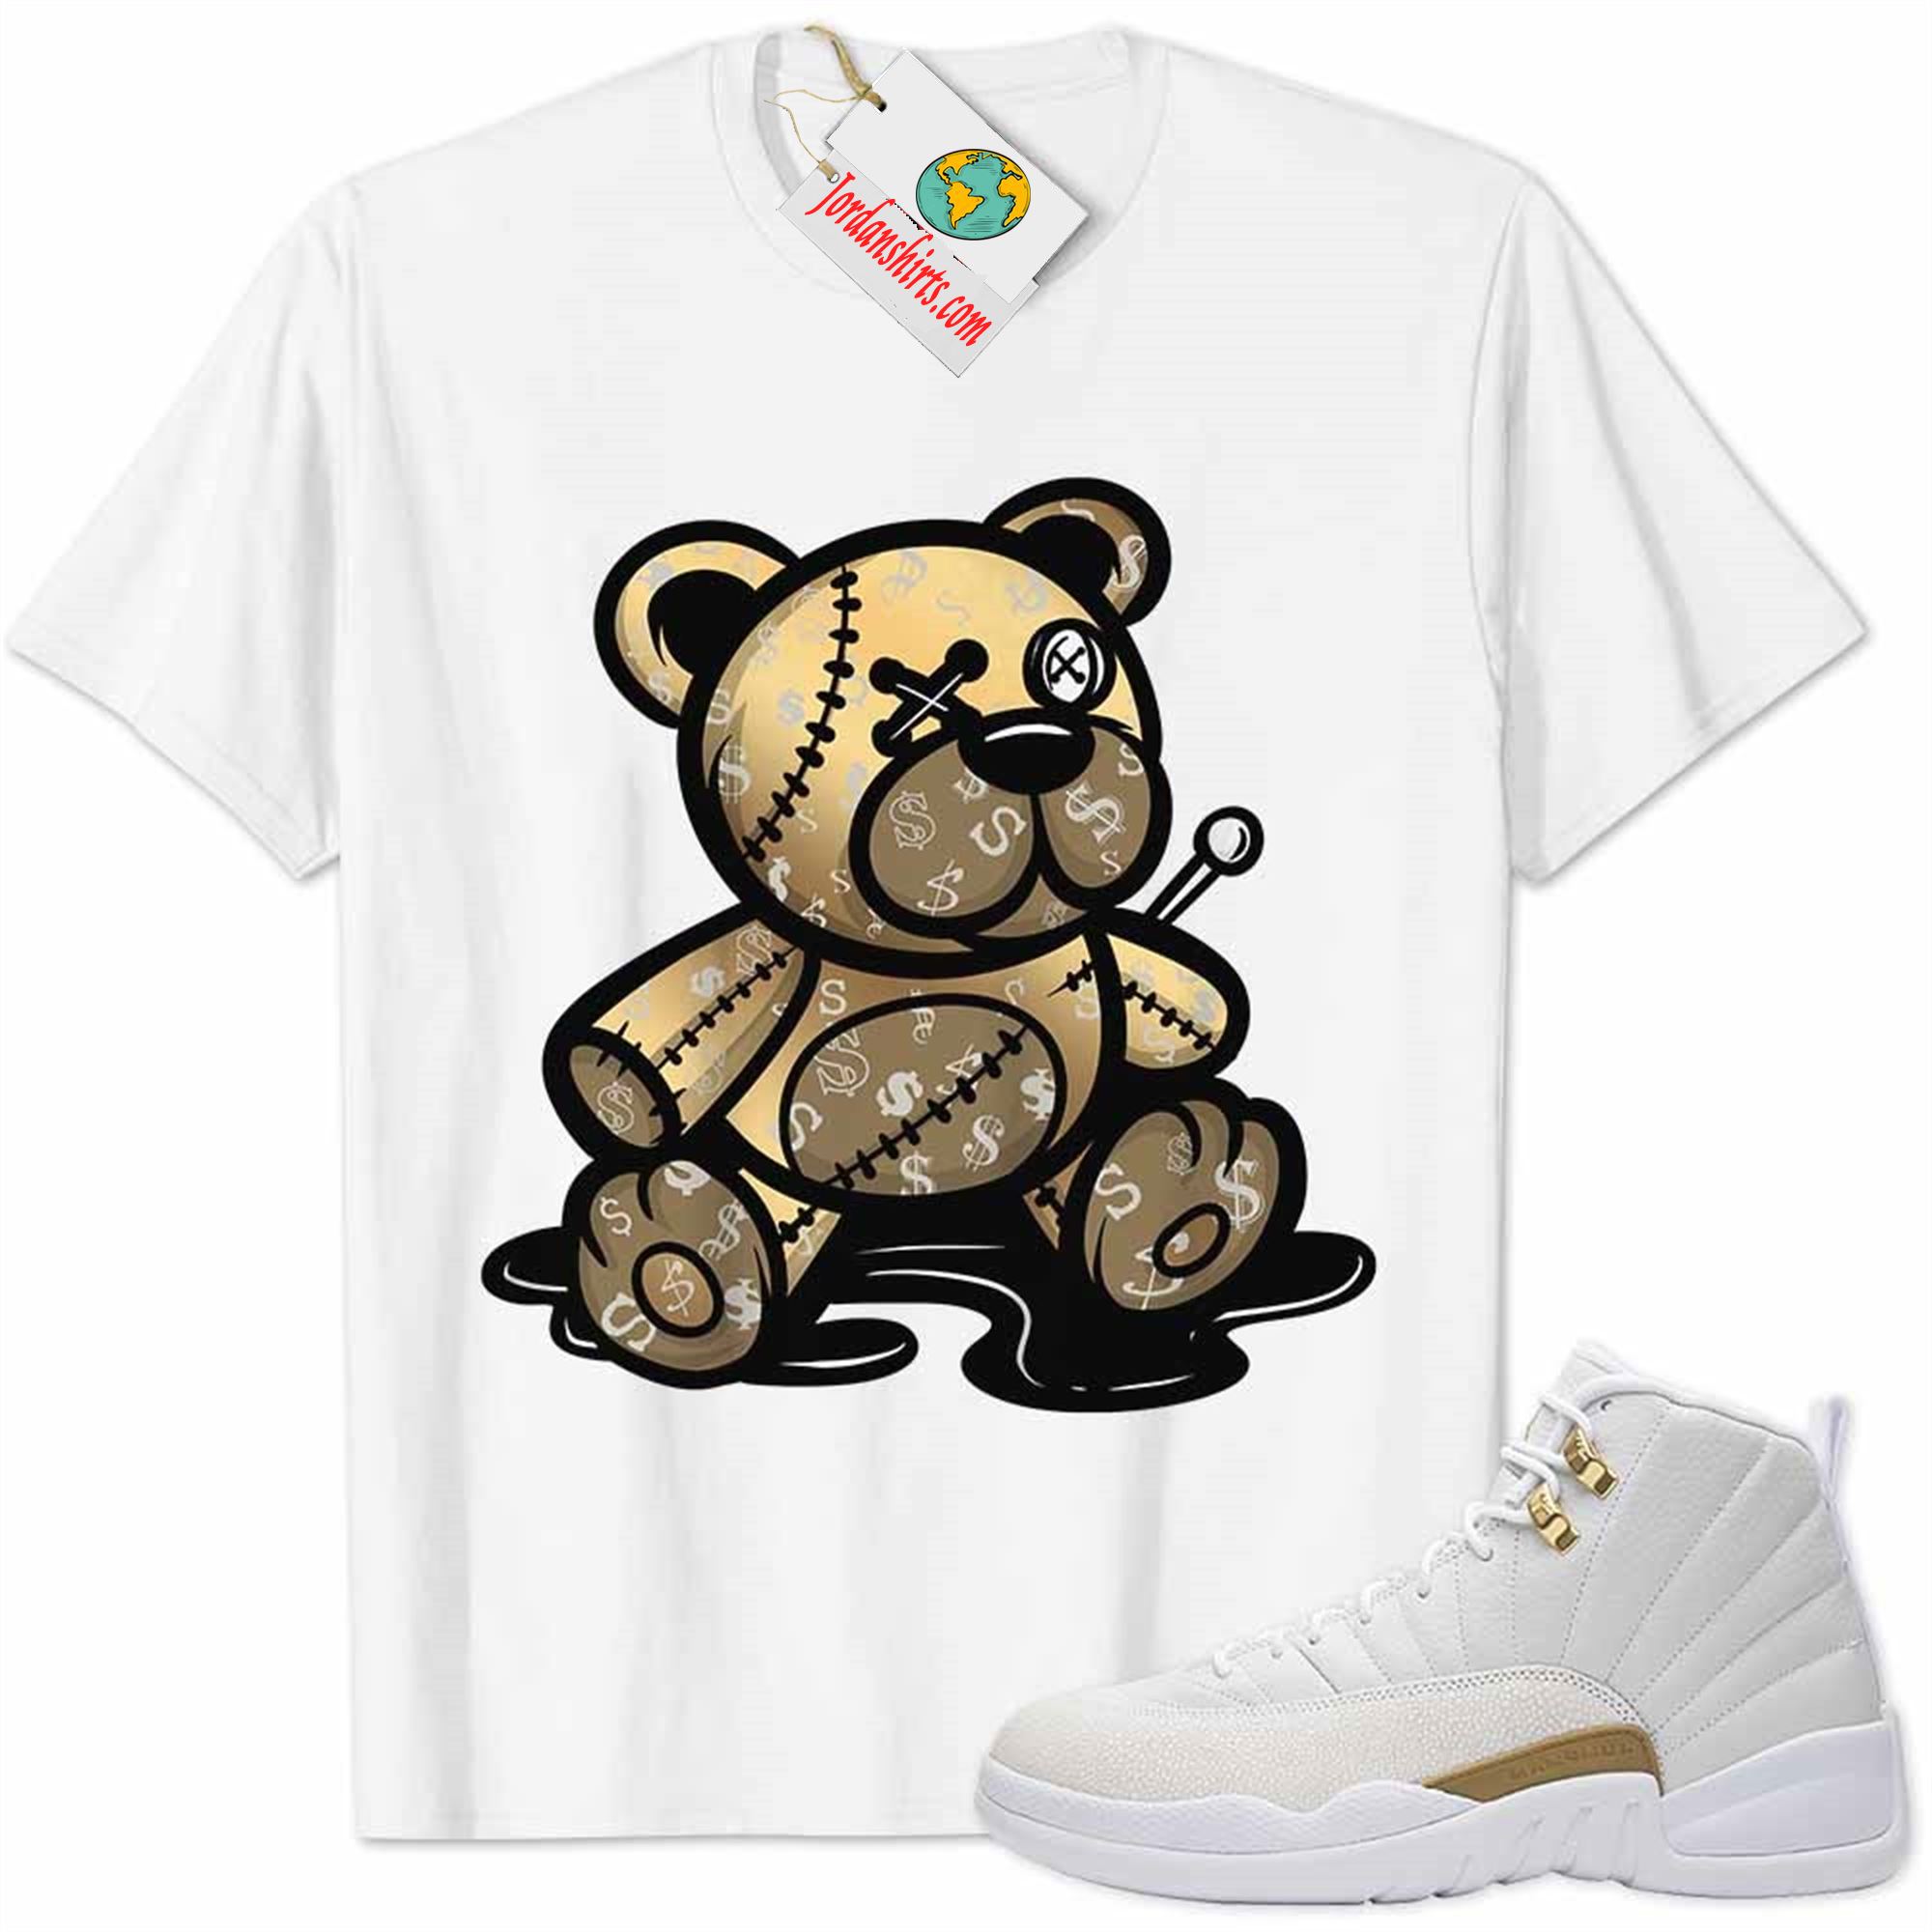 Jordan 12 Shirt, Jordan 12 Ovo Shirt Teddy Bear All Money In White Full Size Up To 5xl